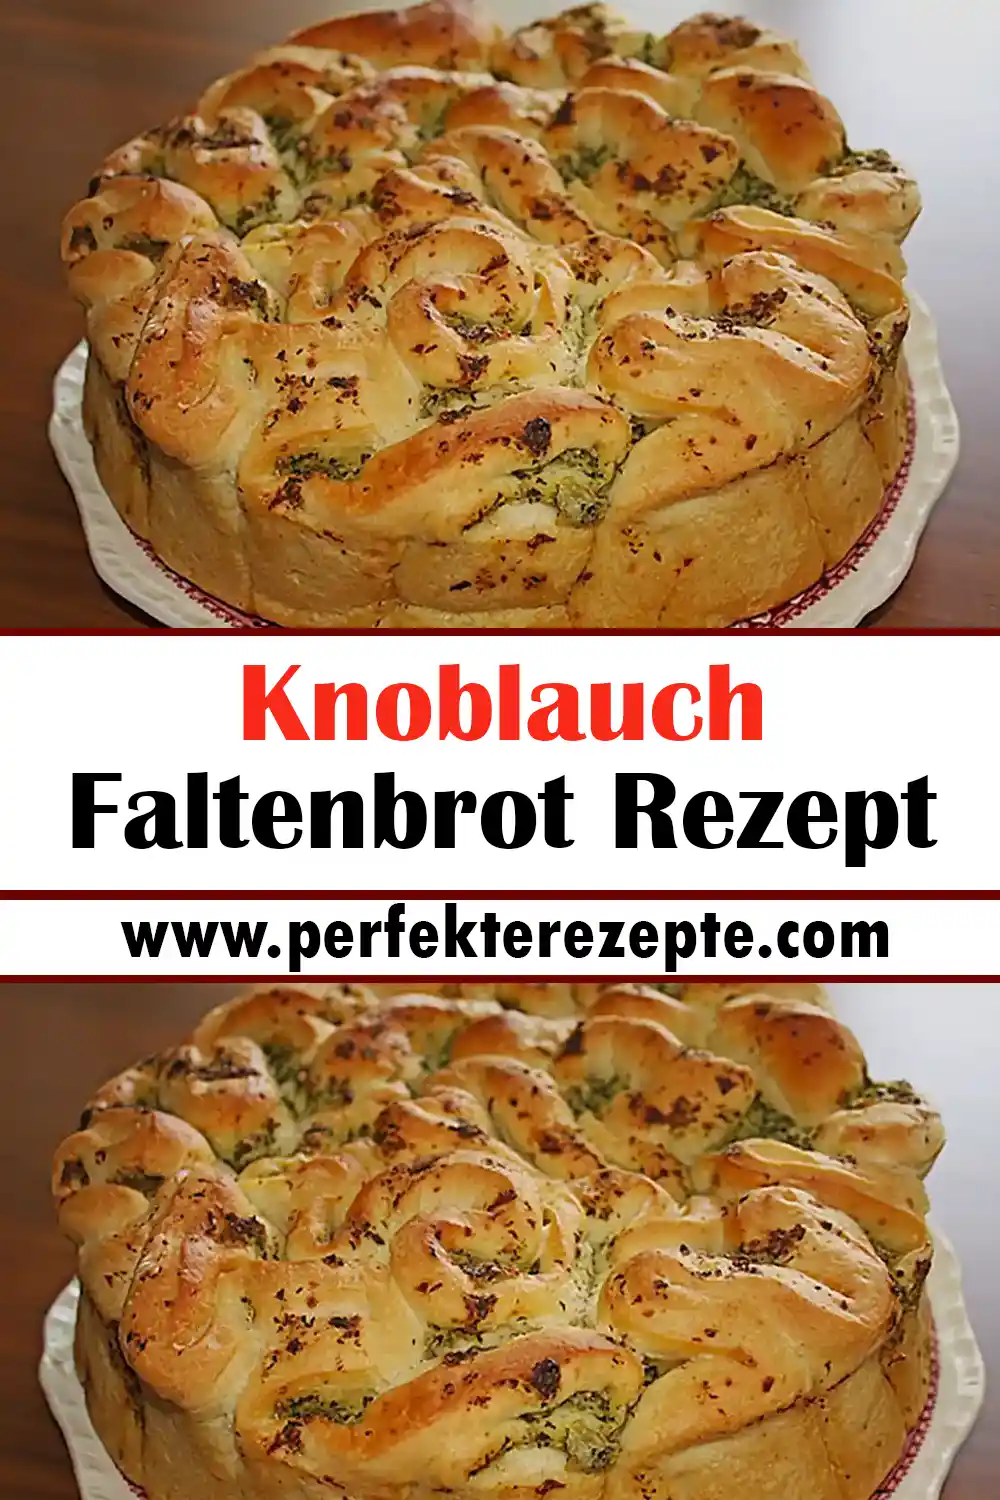 Knoblauch Faltenbrot Rezept